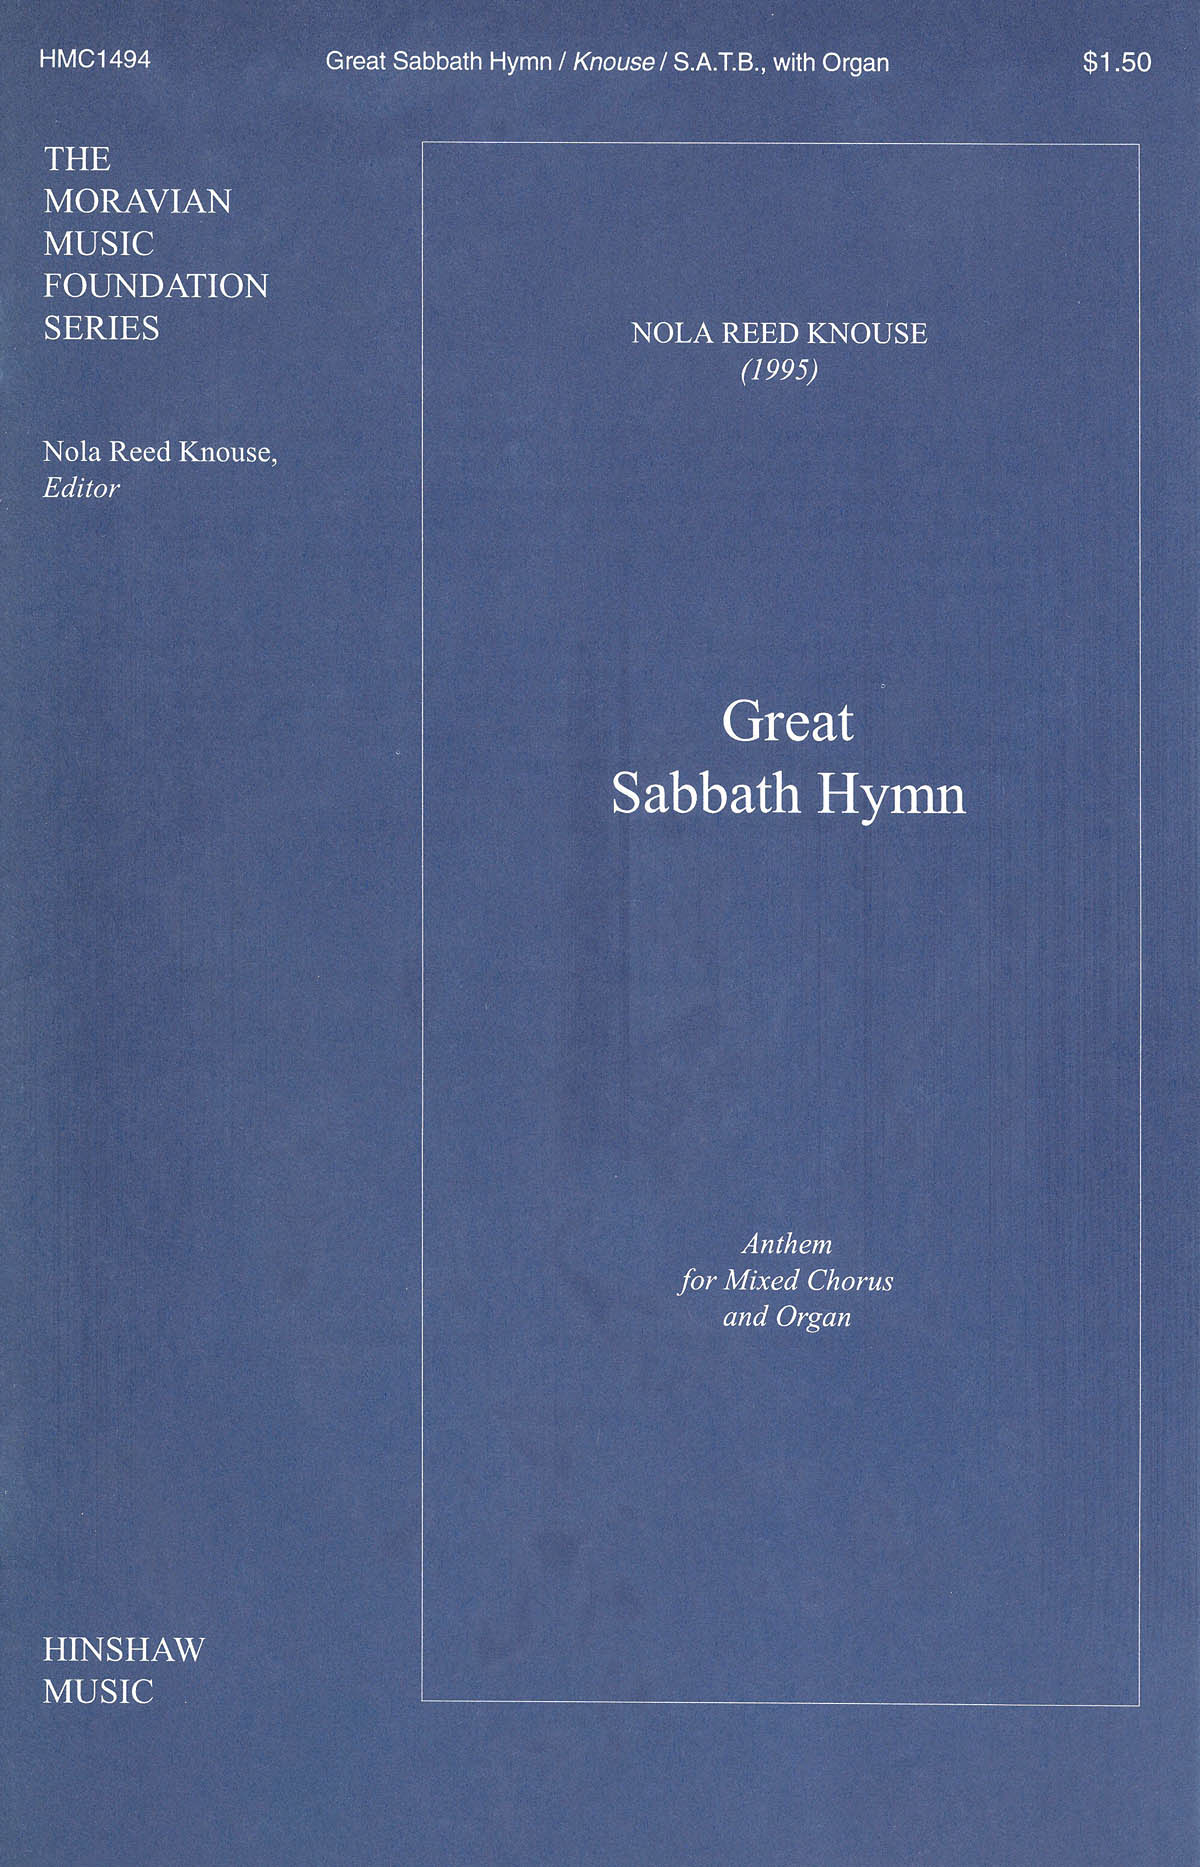 Great Sabbath Hymn